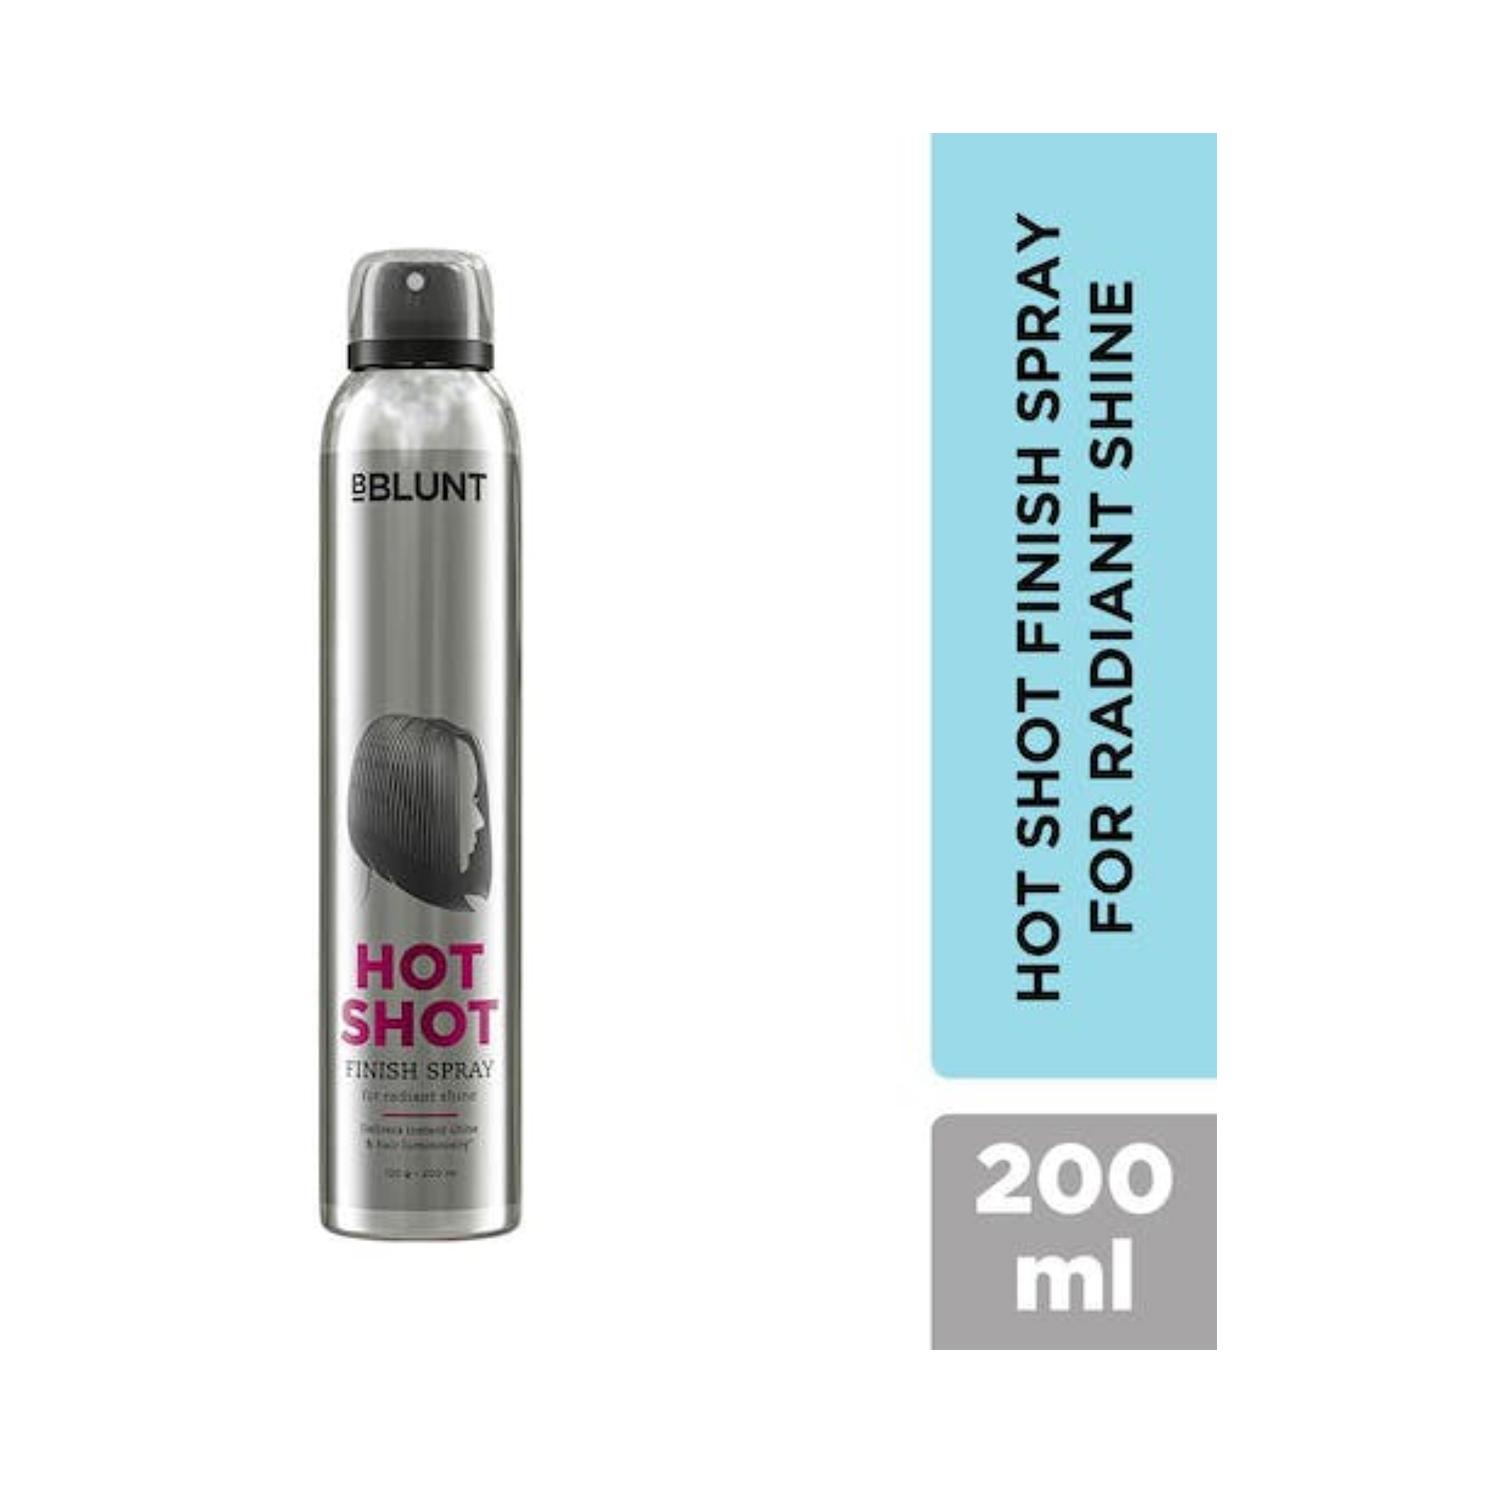 bblunt-hot-shot-finish-spray-for-radiant-shine-(200ml)